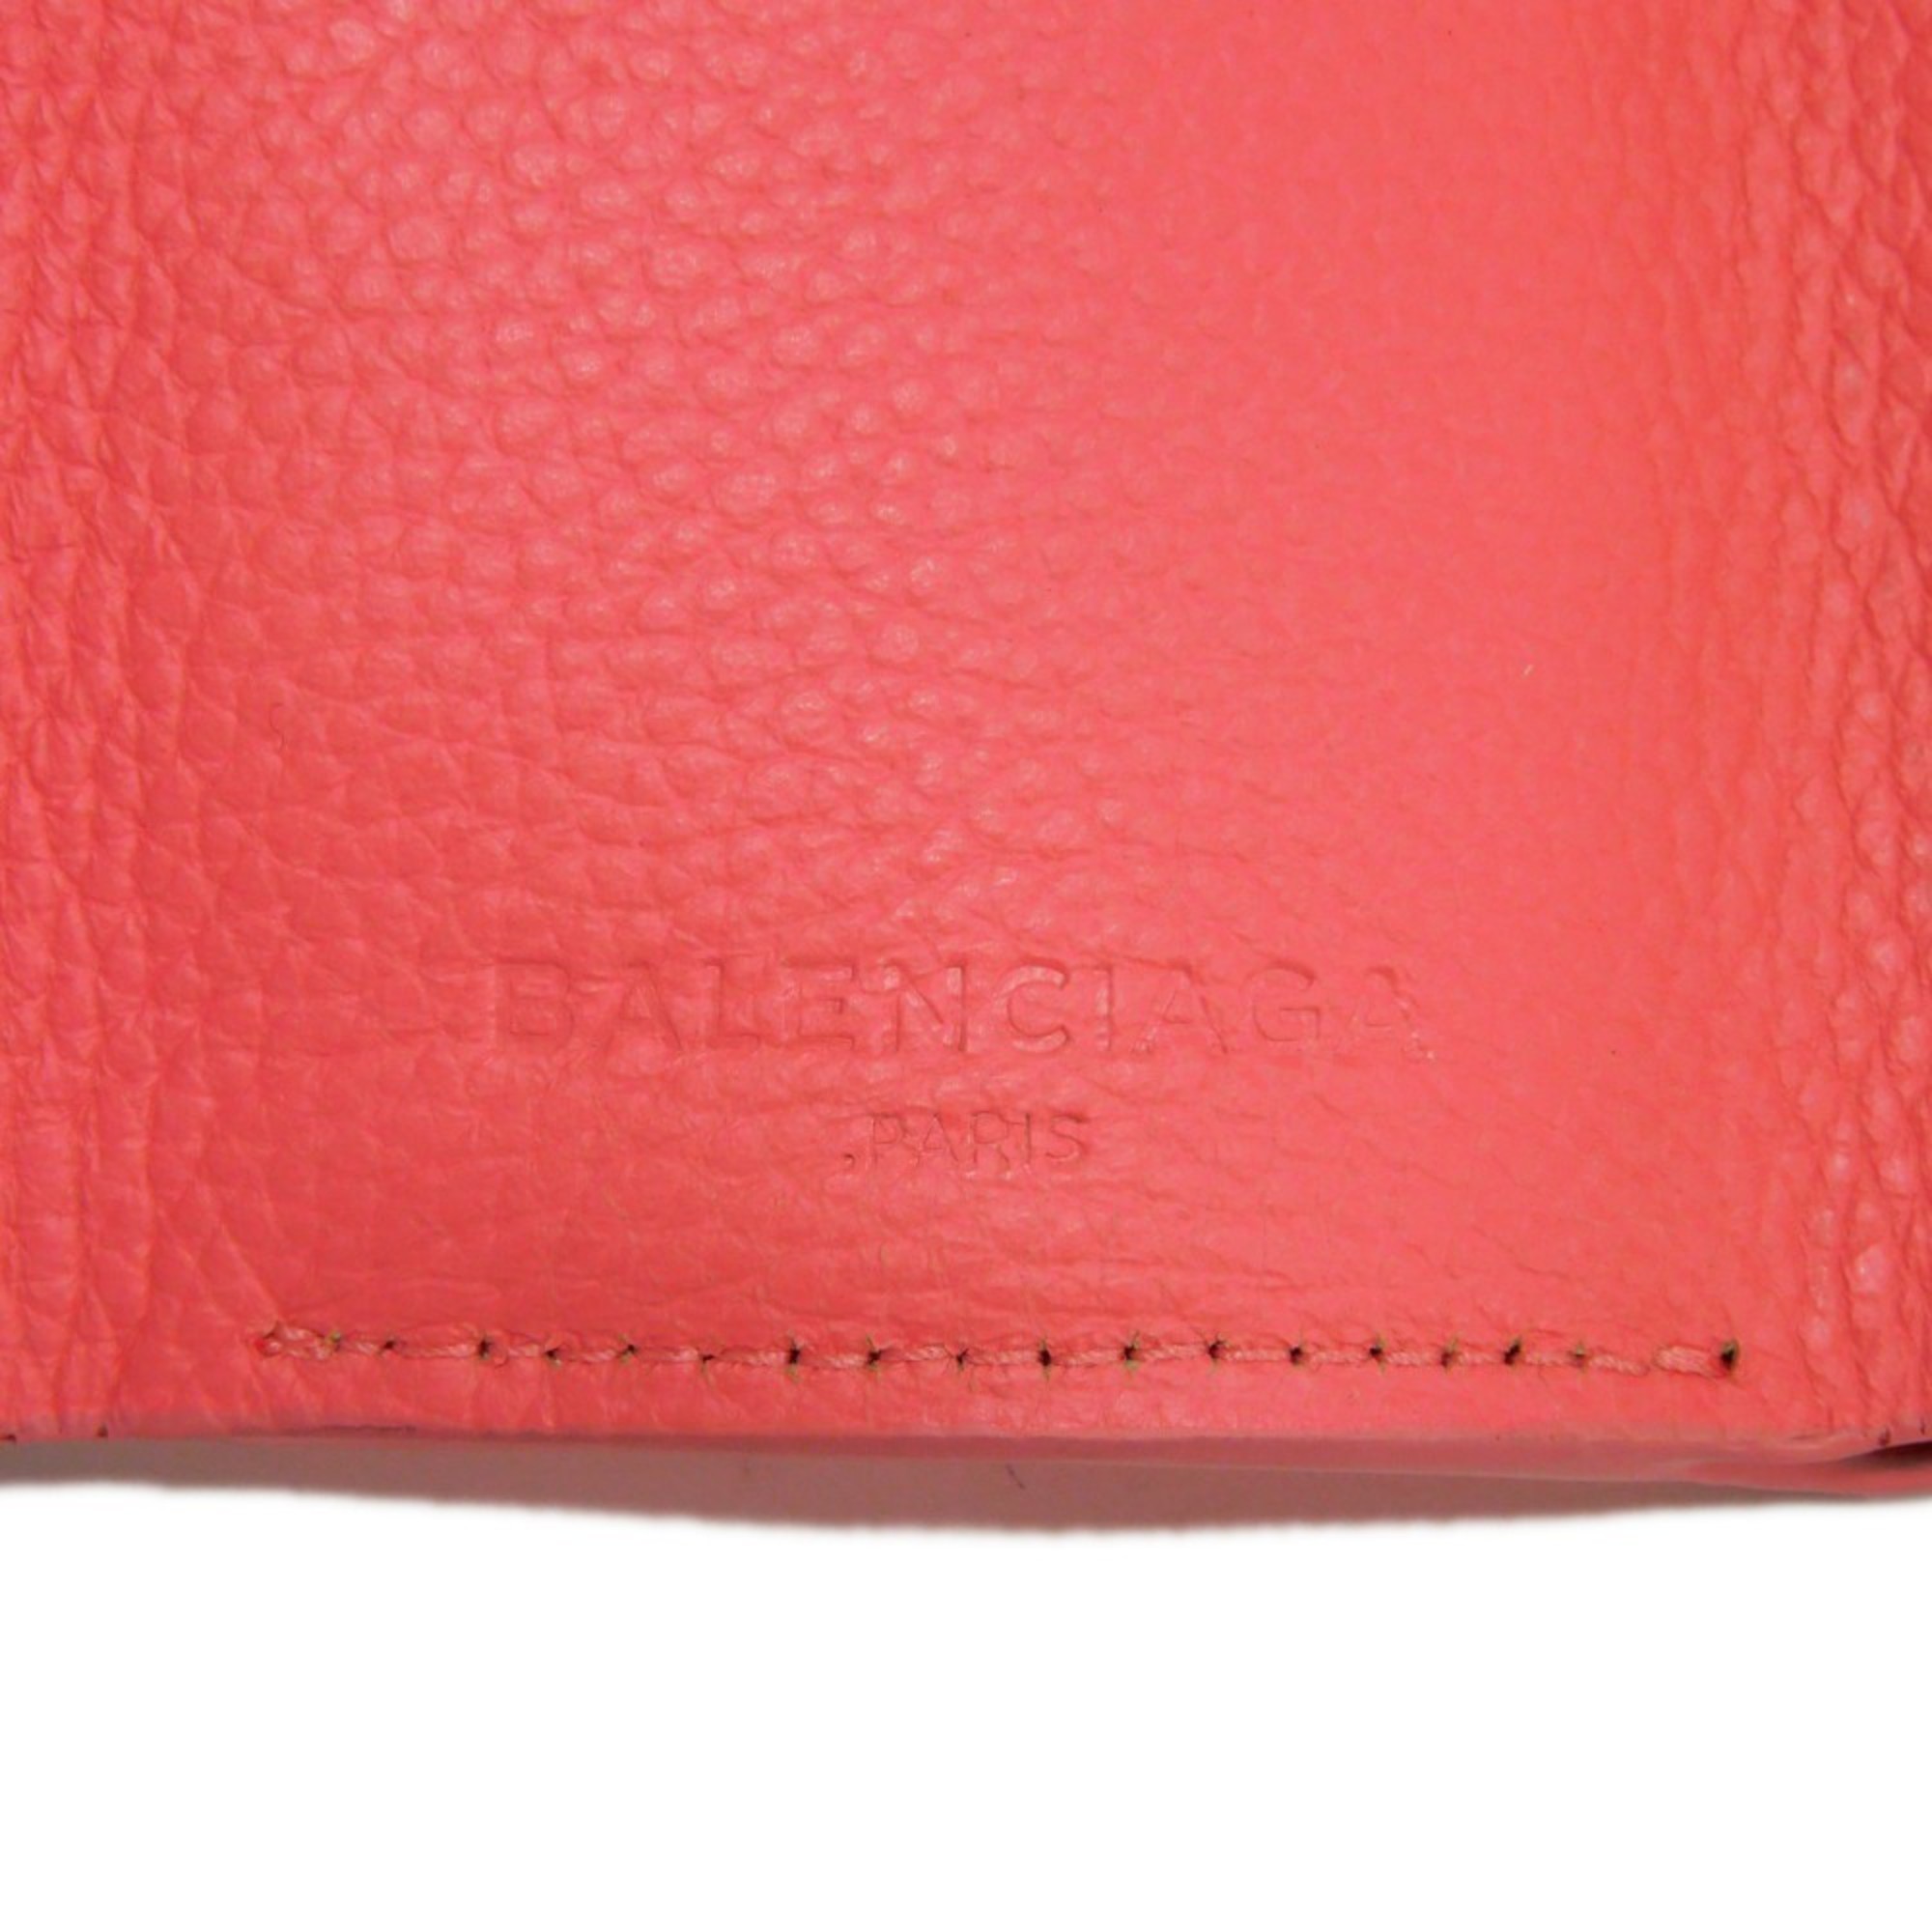 BALENCIAGA Trifold Wallet Classic Mini Calf Snap Button Studs Pink 431653 DY60G 5817 Women's